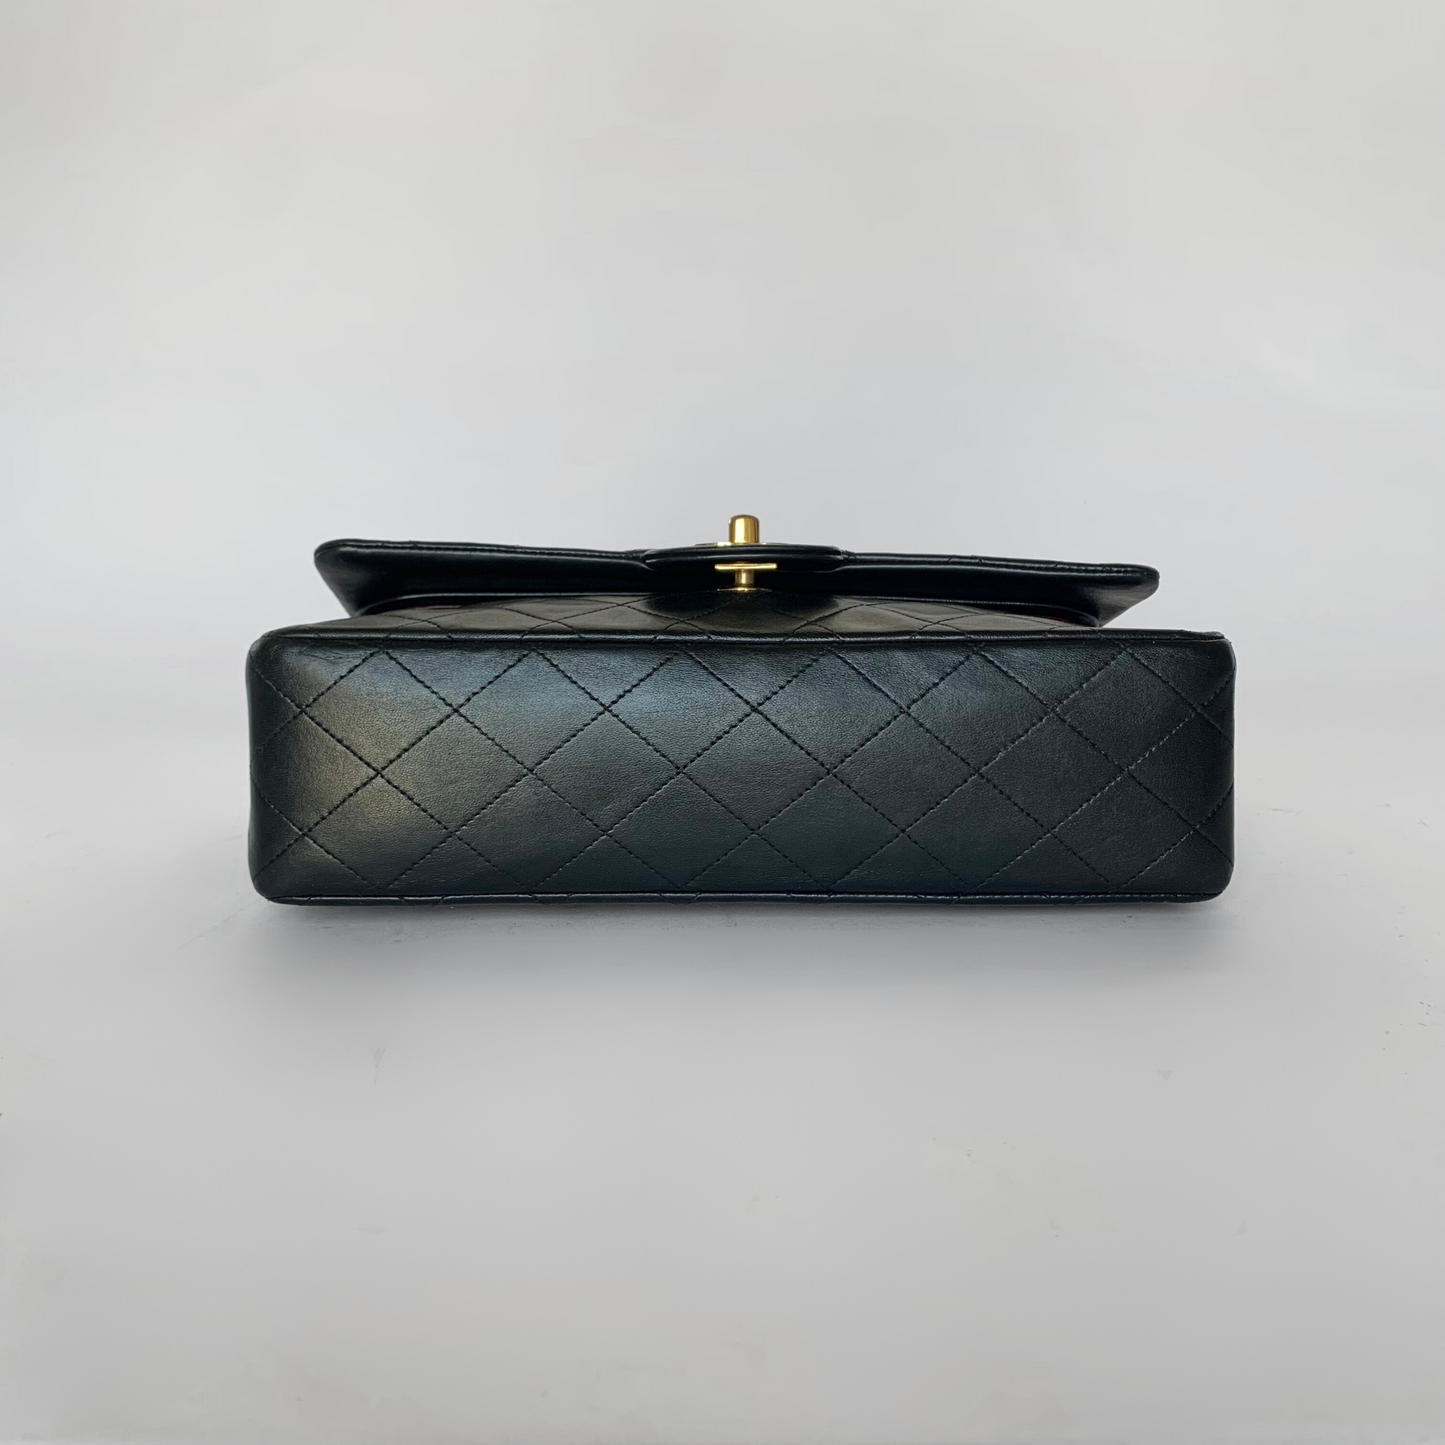 Chanel Chanel Doble clasica Flap Bag Mediano Piel Cordero - Bolso de hombro - Etoile Luxury Vintage